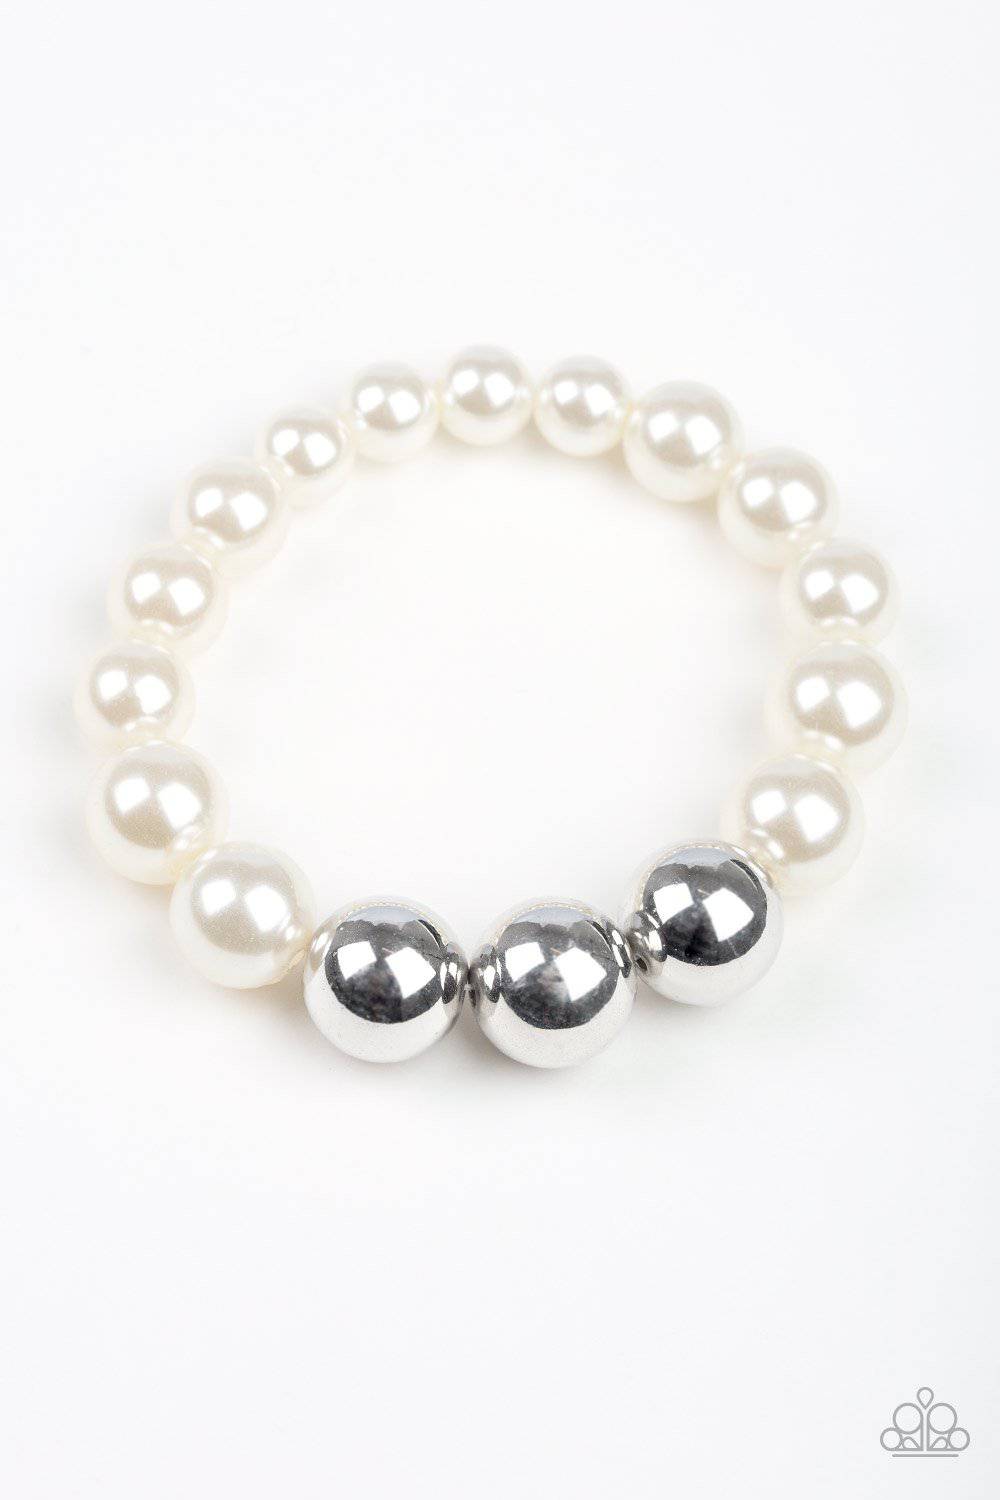 All Dressed UPTOWN - White Pearl Bracelet - Paparazzi Accessories - GlaMarous Titi Jewels